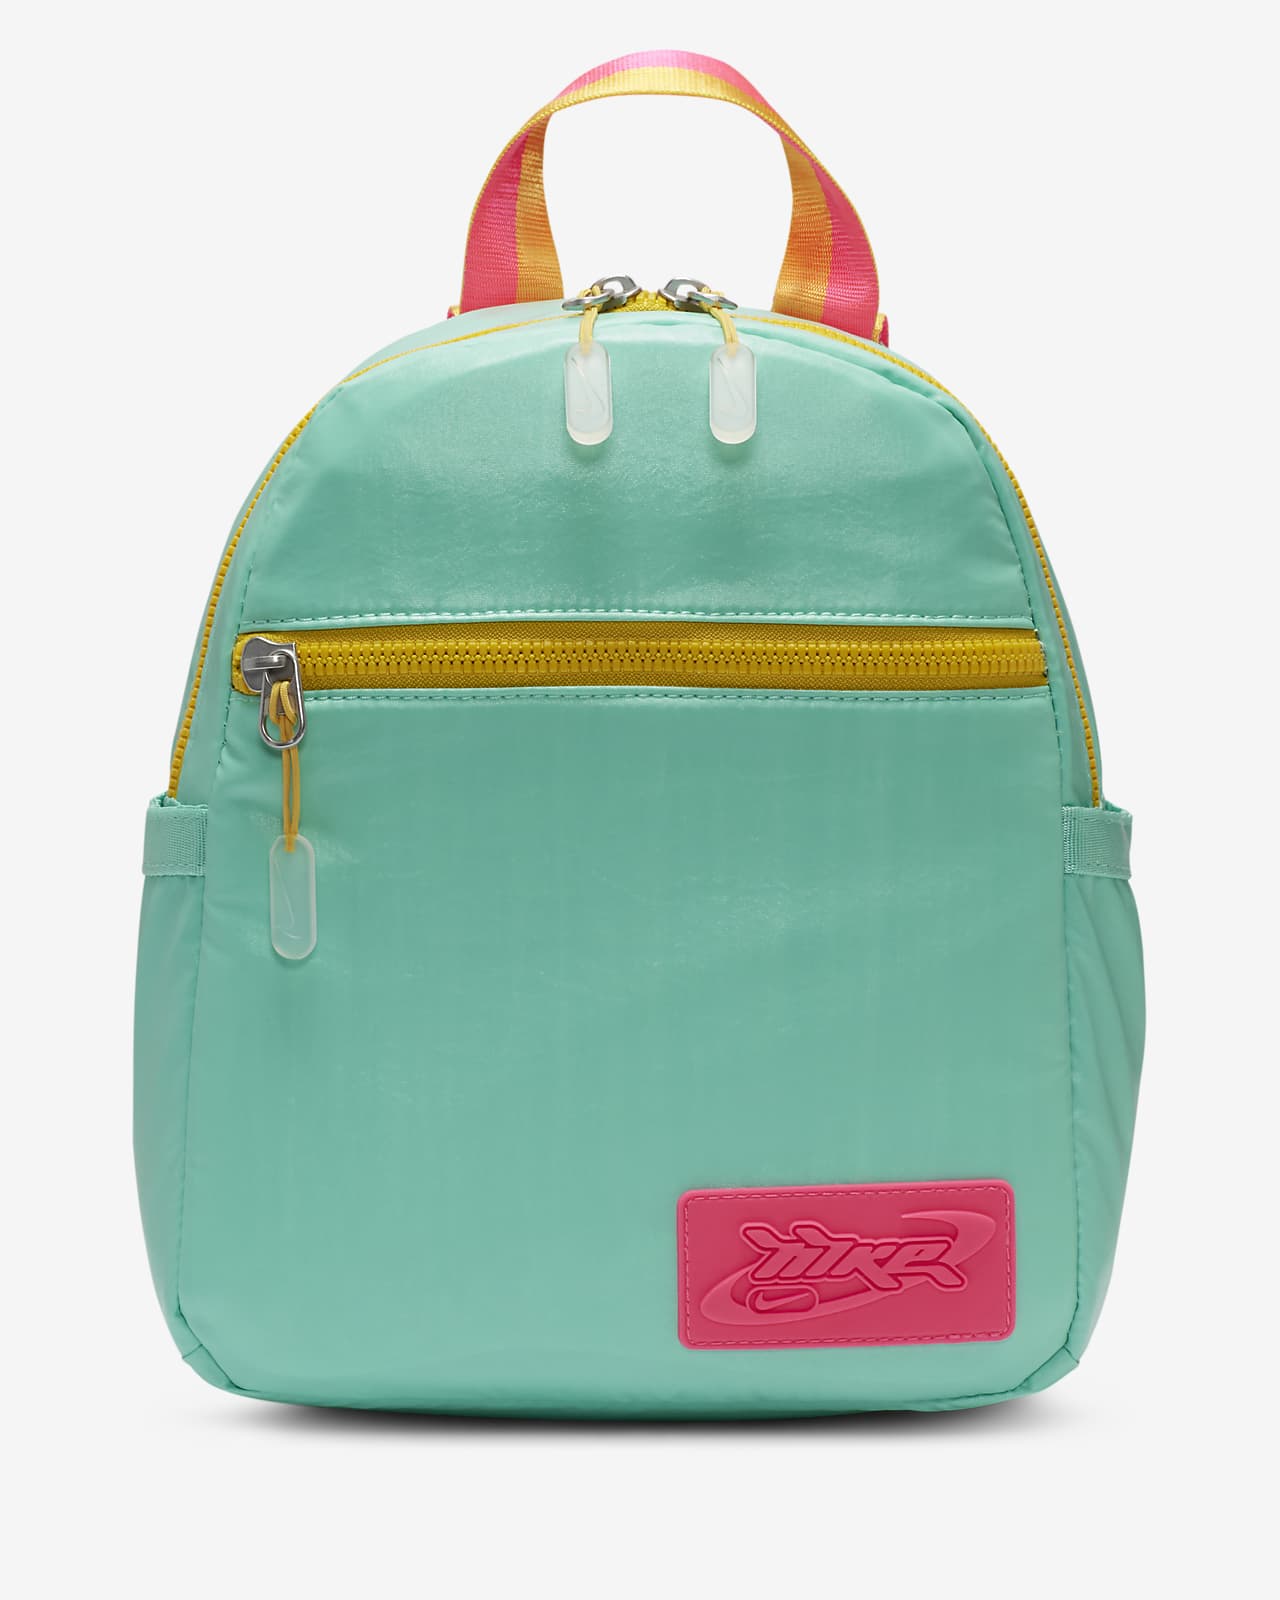 Nike Sportswear Futura 365 Mini Backpack 